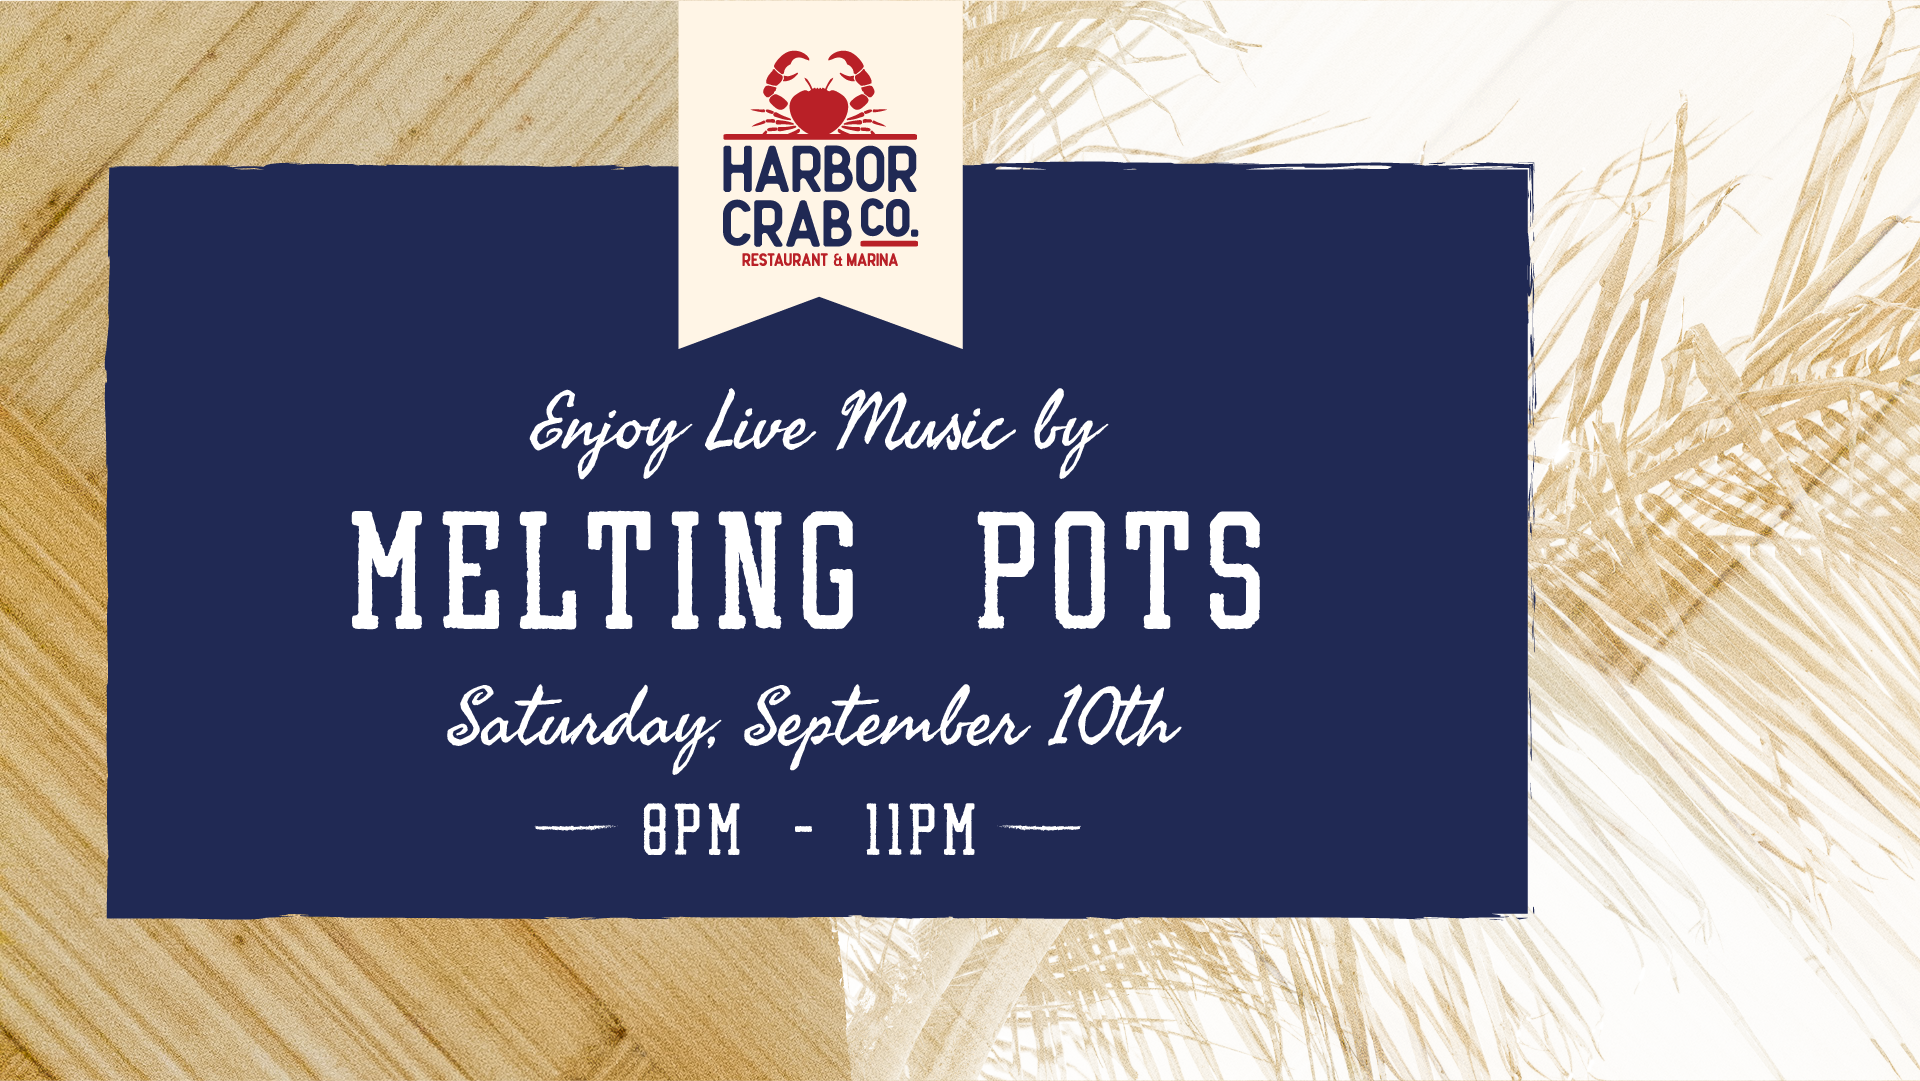 Flyer for Melting Pots on Saturday, September 10th